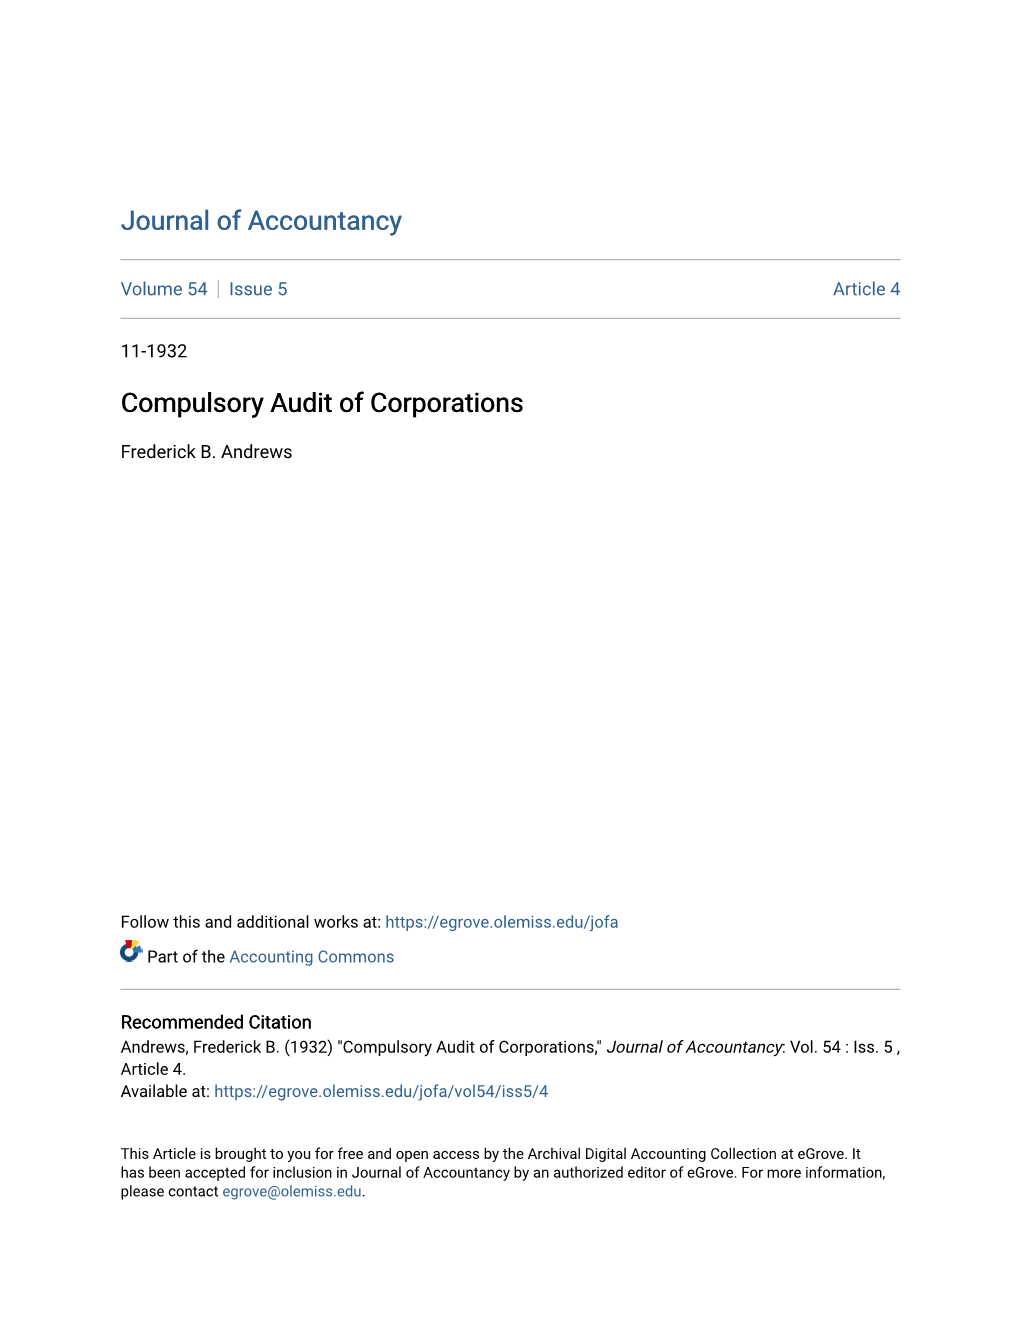 Compulsory Audit of Corporations